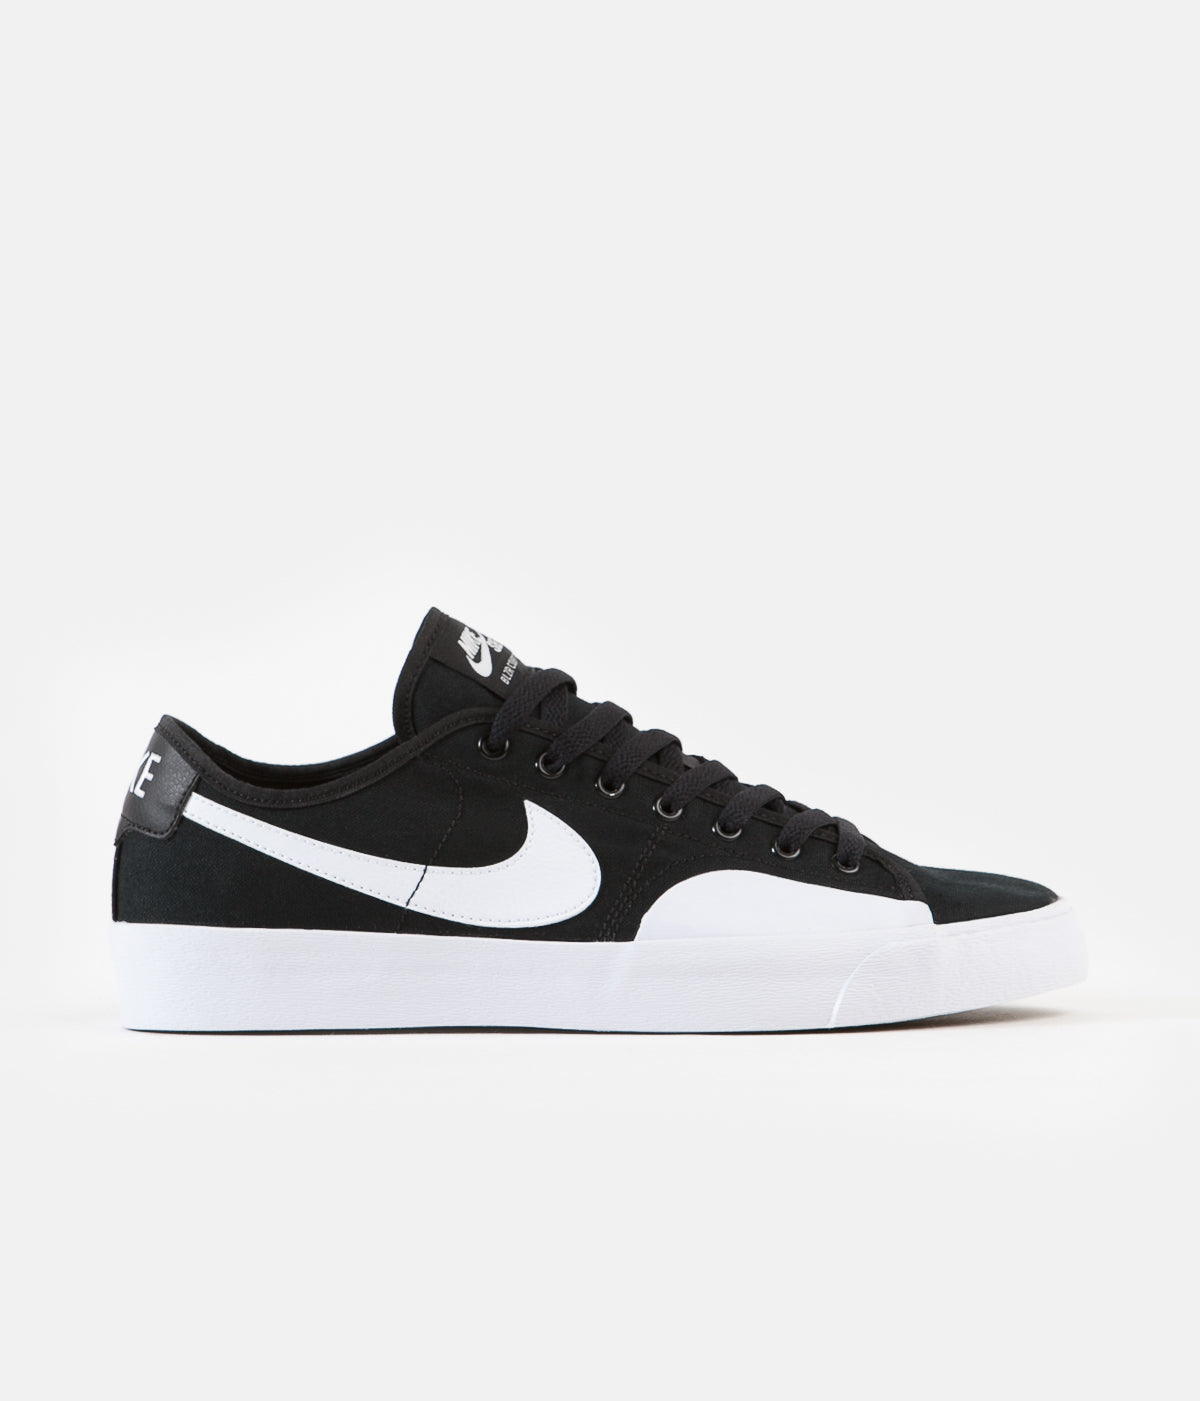 Nike SB Blazer Court Shoes - Black / White - Black - Gum Light Brown ...